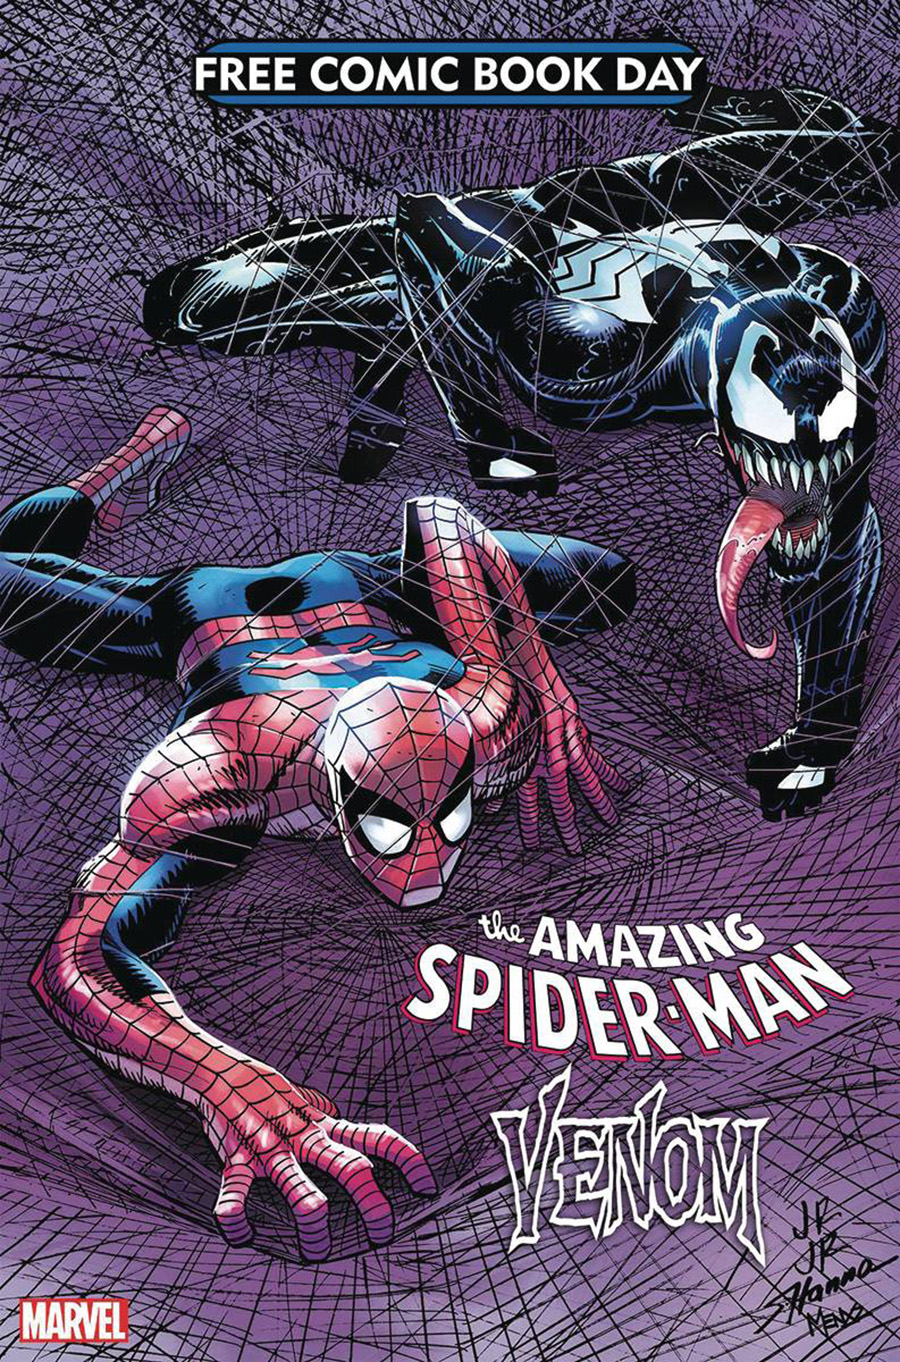 Spider-Man Venom #1 FCBD 2022 Cover A Regular John Romita Jr Cover